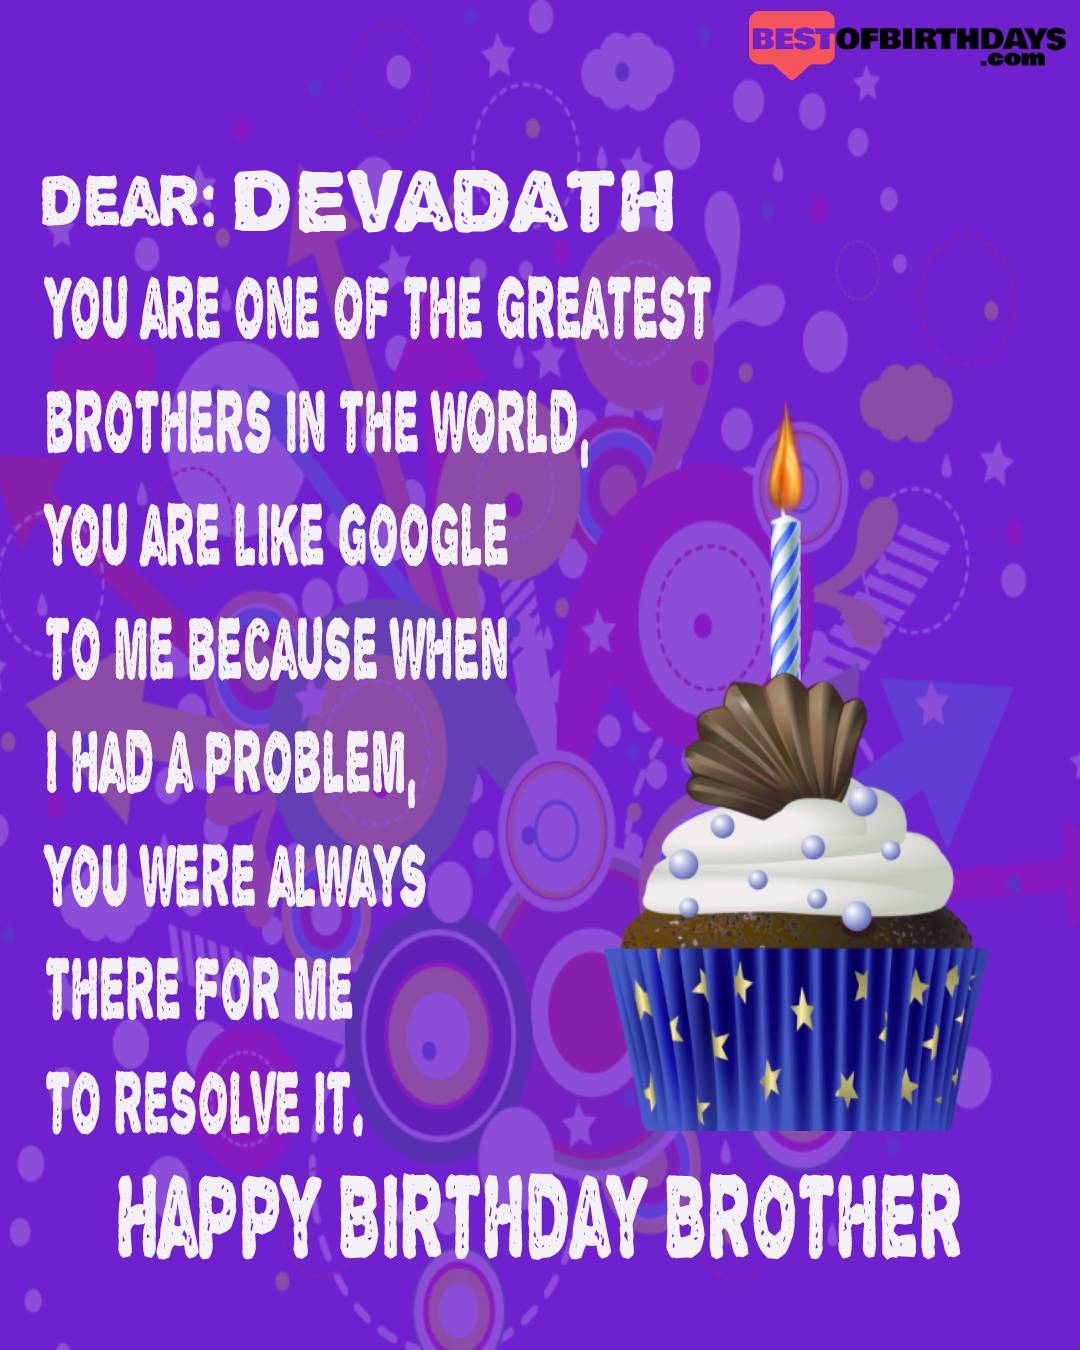 Happy birthday devadath bhai brother bro